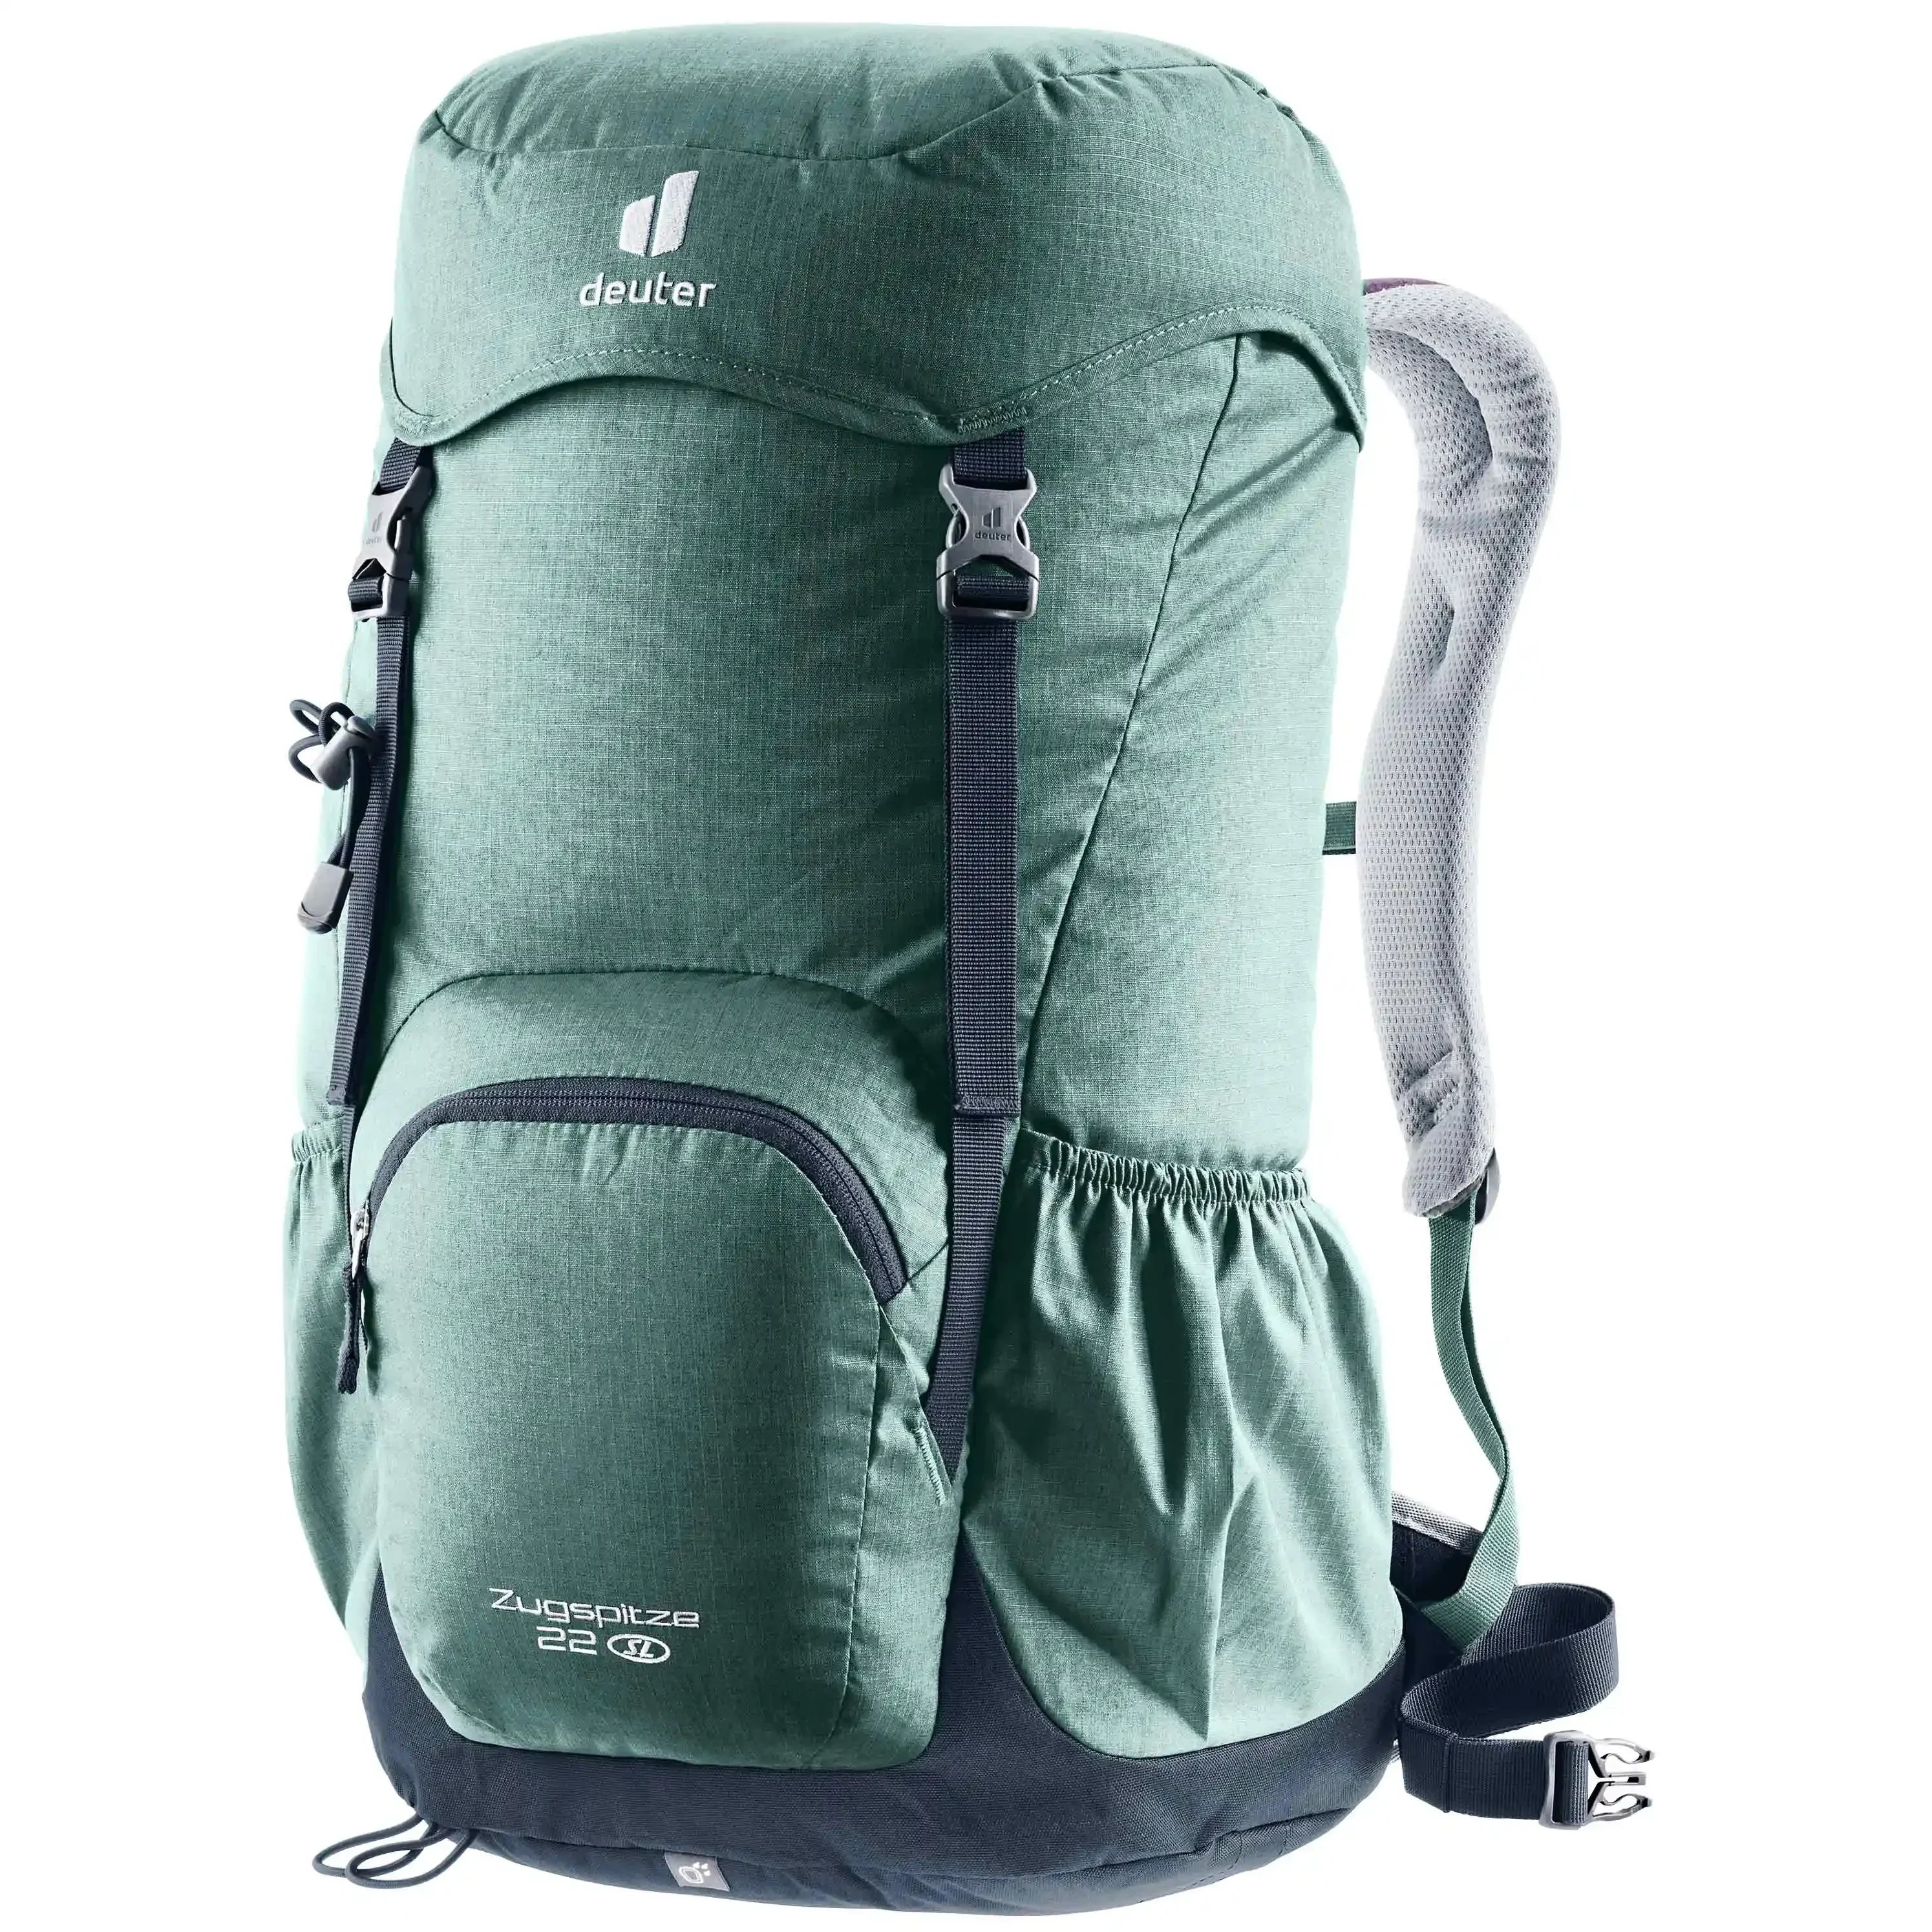 Deuter Travel Zugspitze 22 SL hiking backpack 52 cm - jade-ink